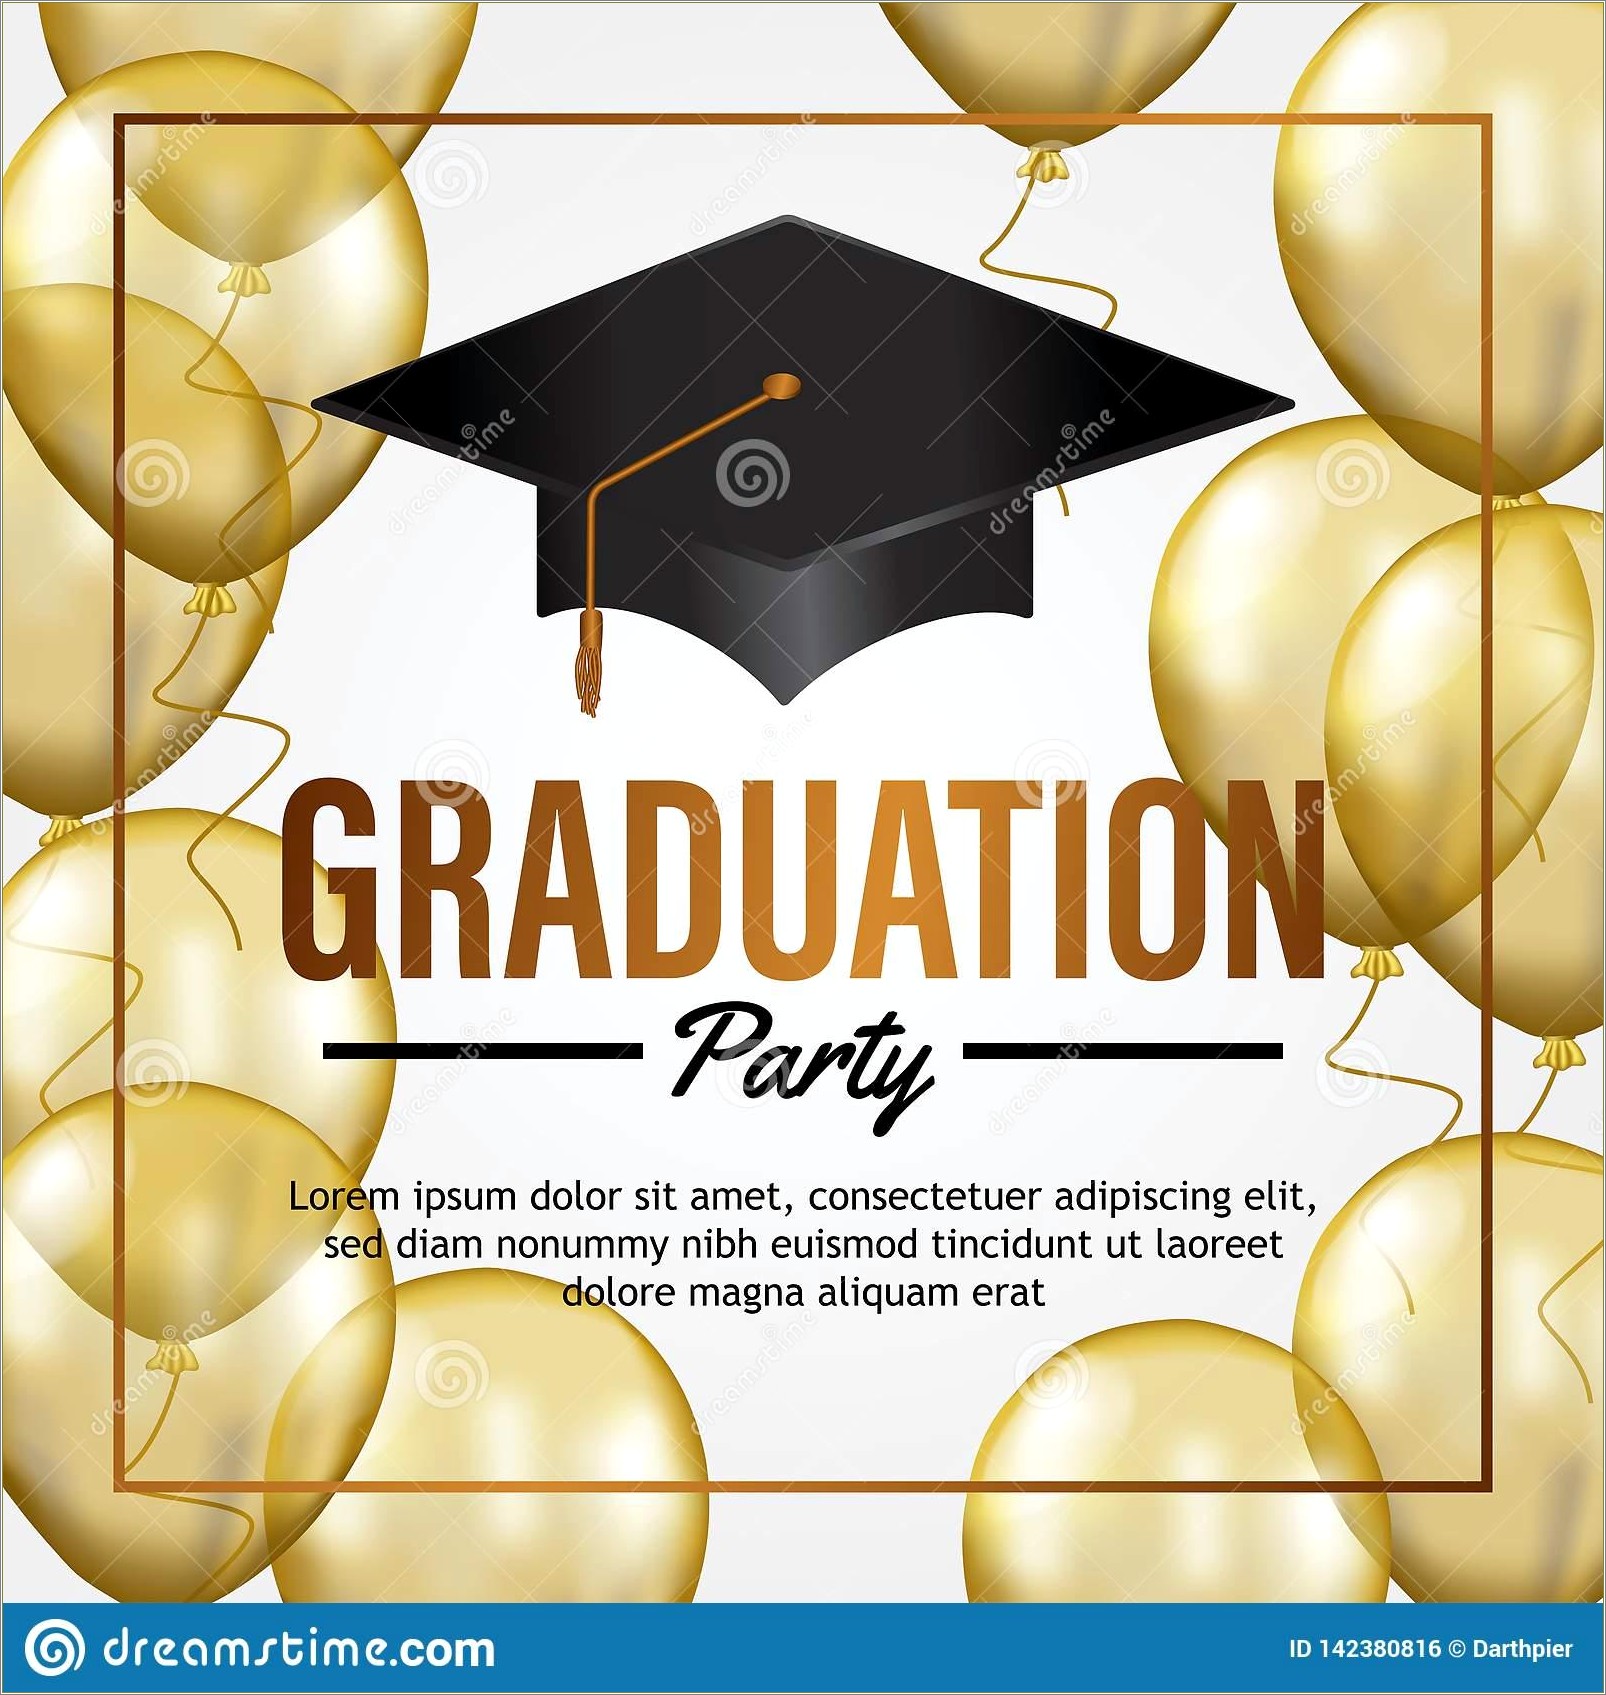 Free Graduation Party Invitation Templates 2019